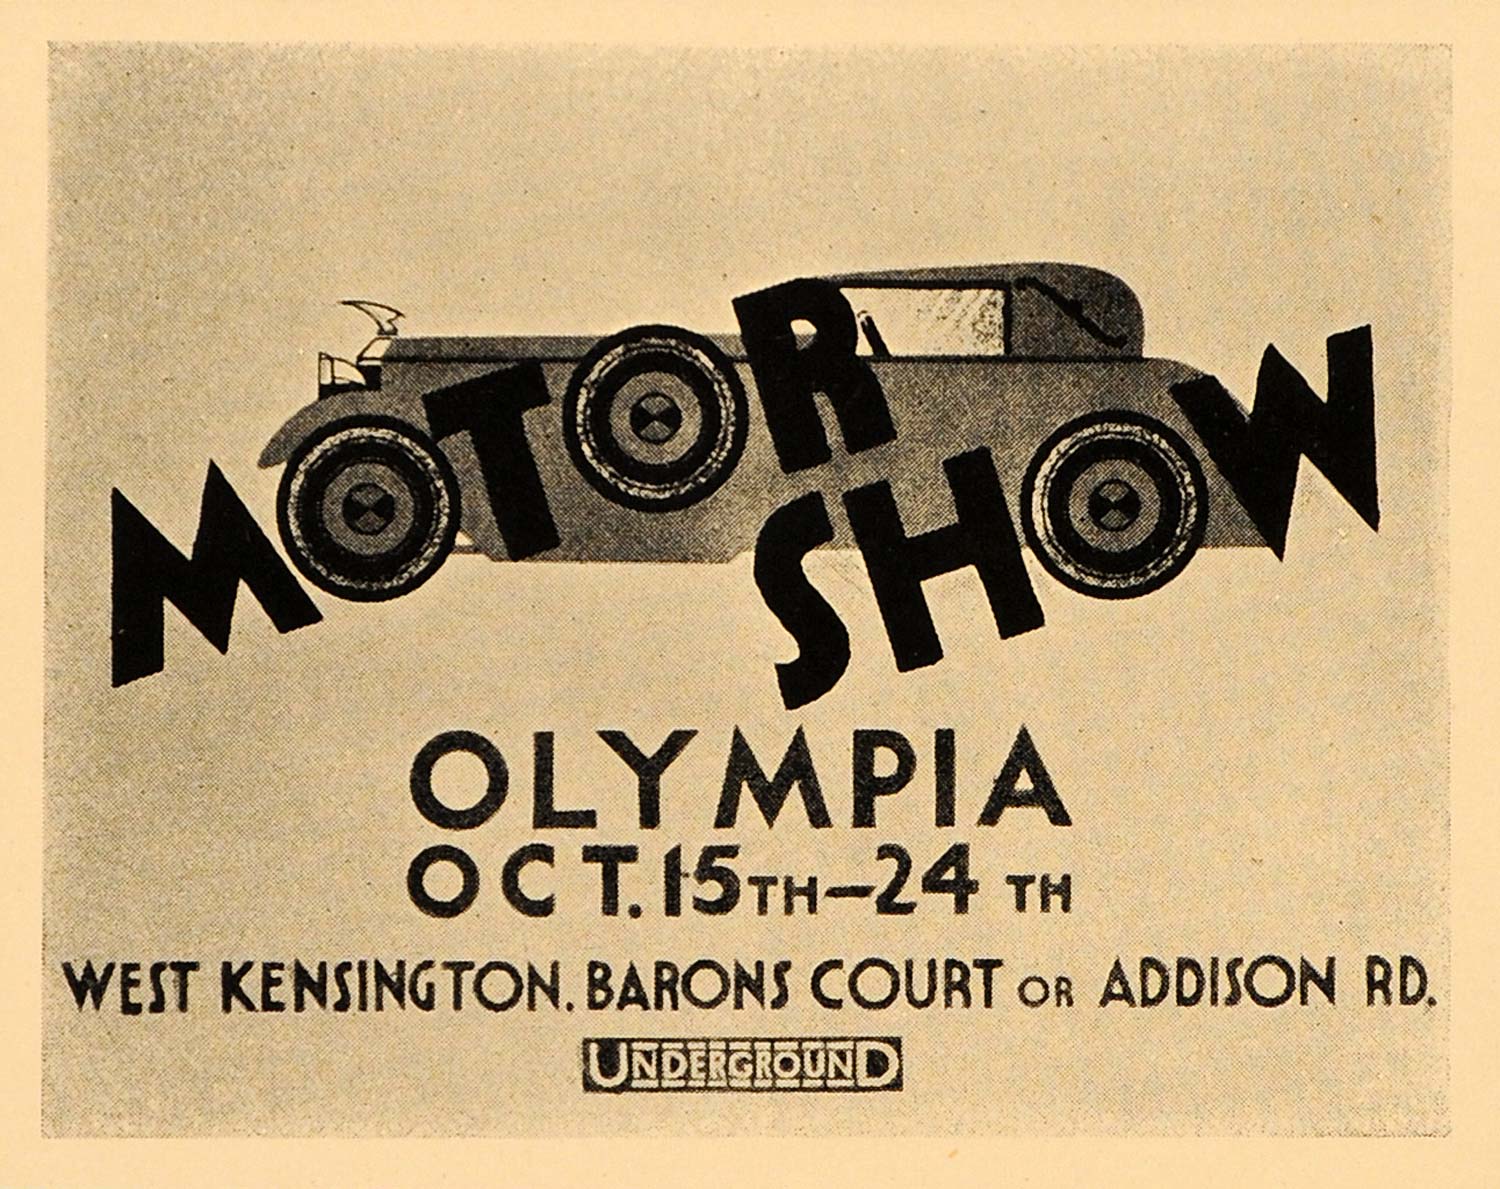 1933 Motor Show Olympia London Automobile Poster Print ORIGINAL HISTORIC POSA6